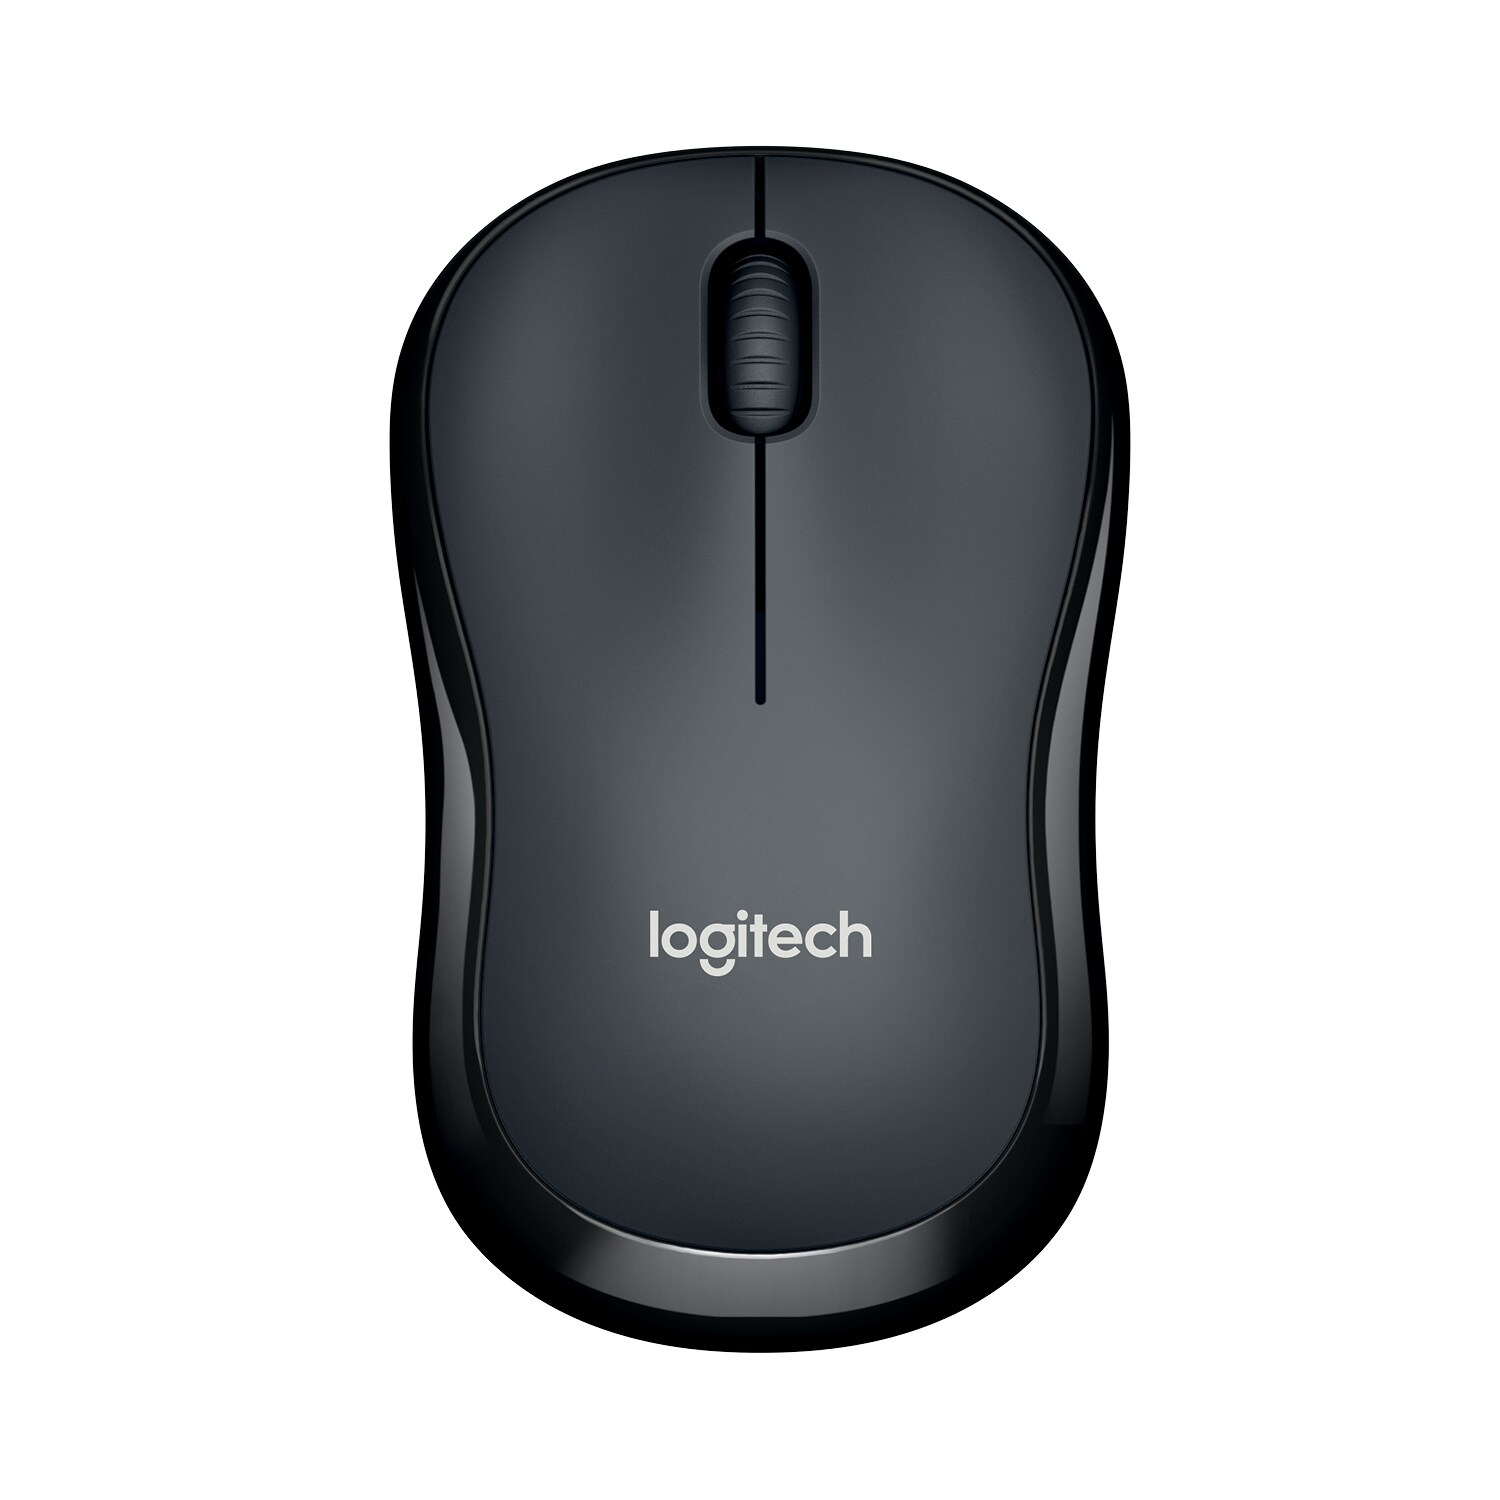 Logitech M220 Silent trådlös mus (svart) - Datormus - Elgiganten